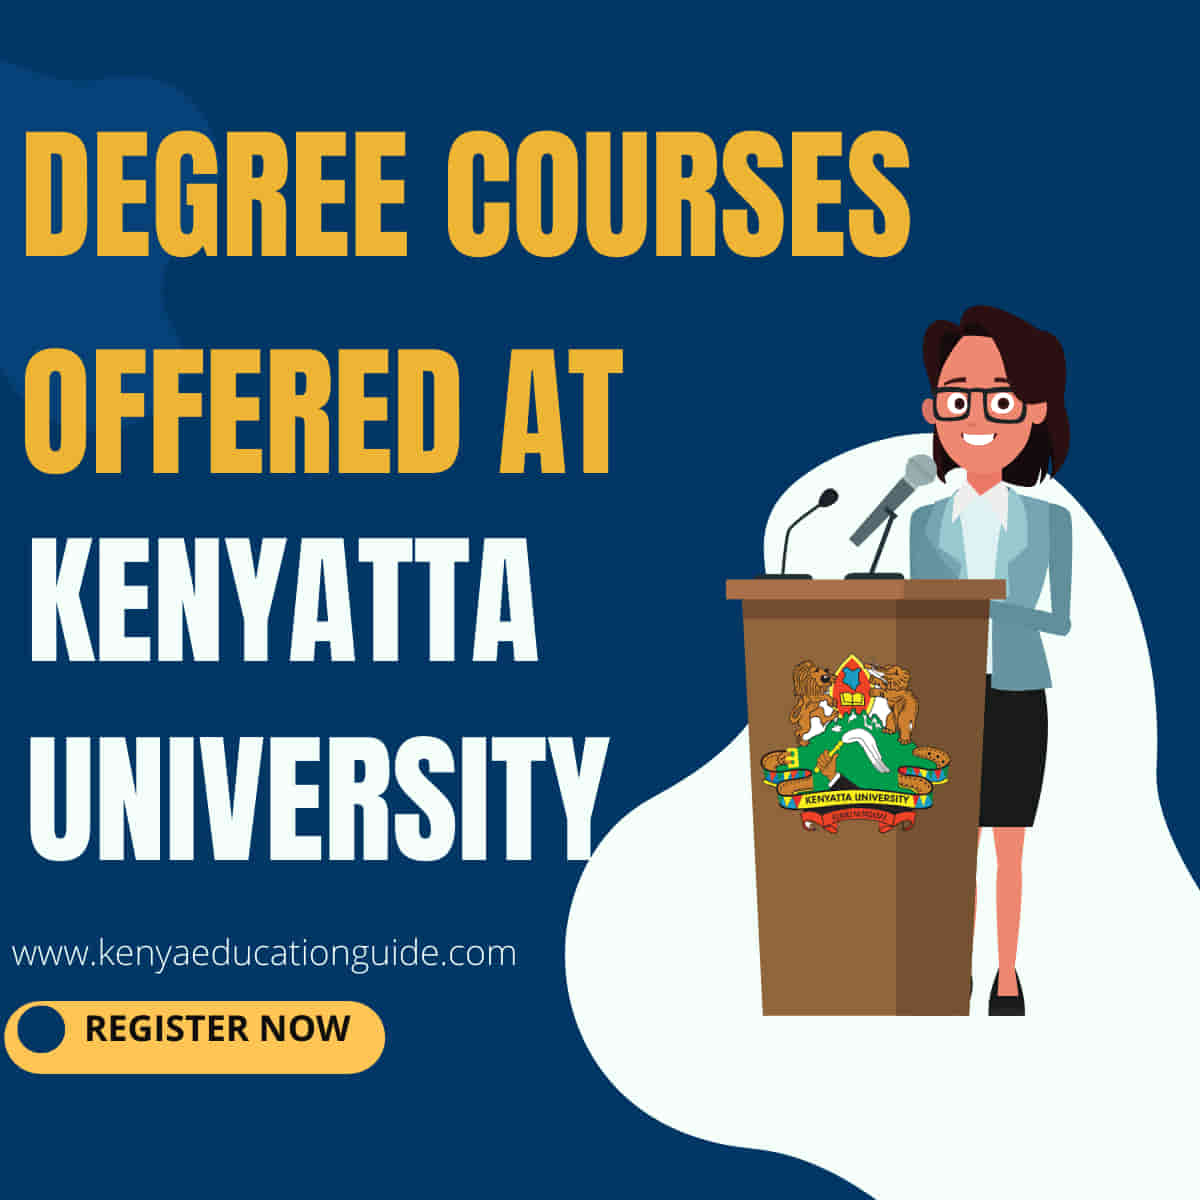 Degree courses in Kenyatta university